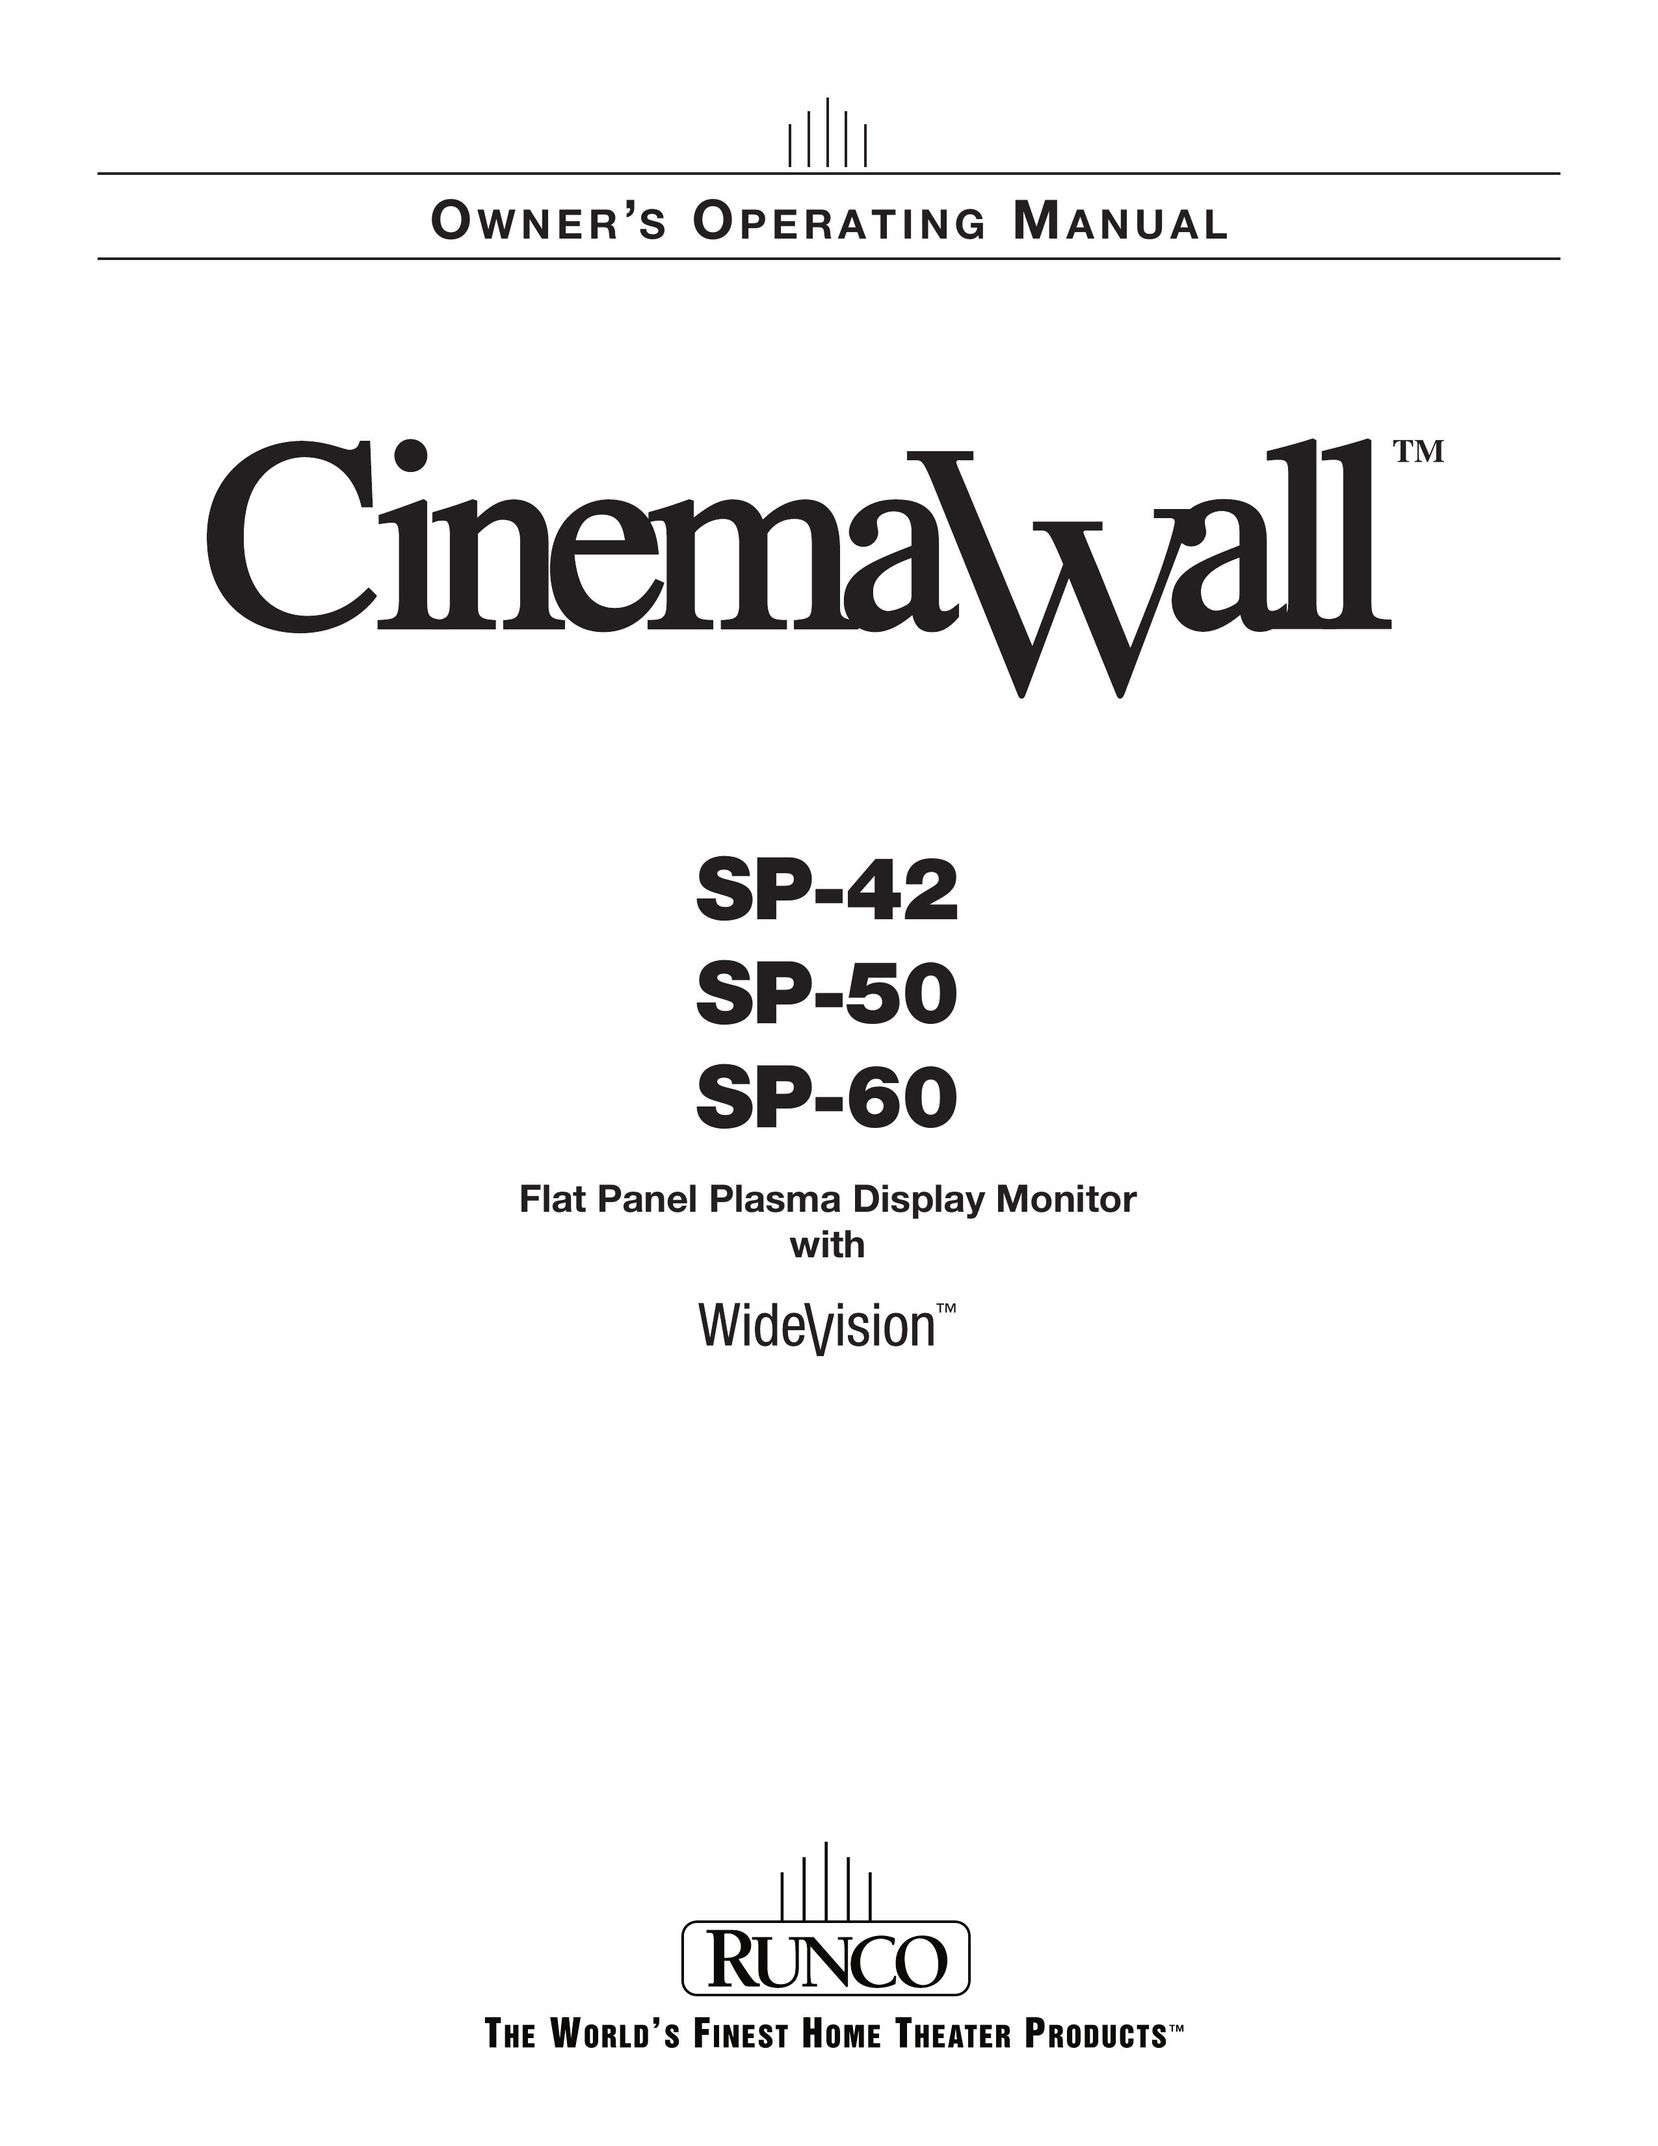 Runco SP-60 Home Theater Screen User Manual